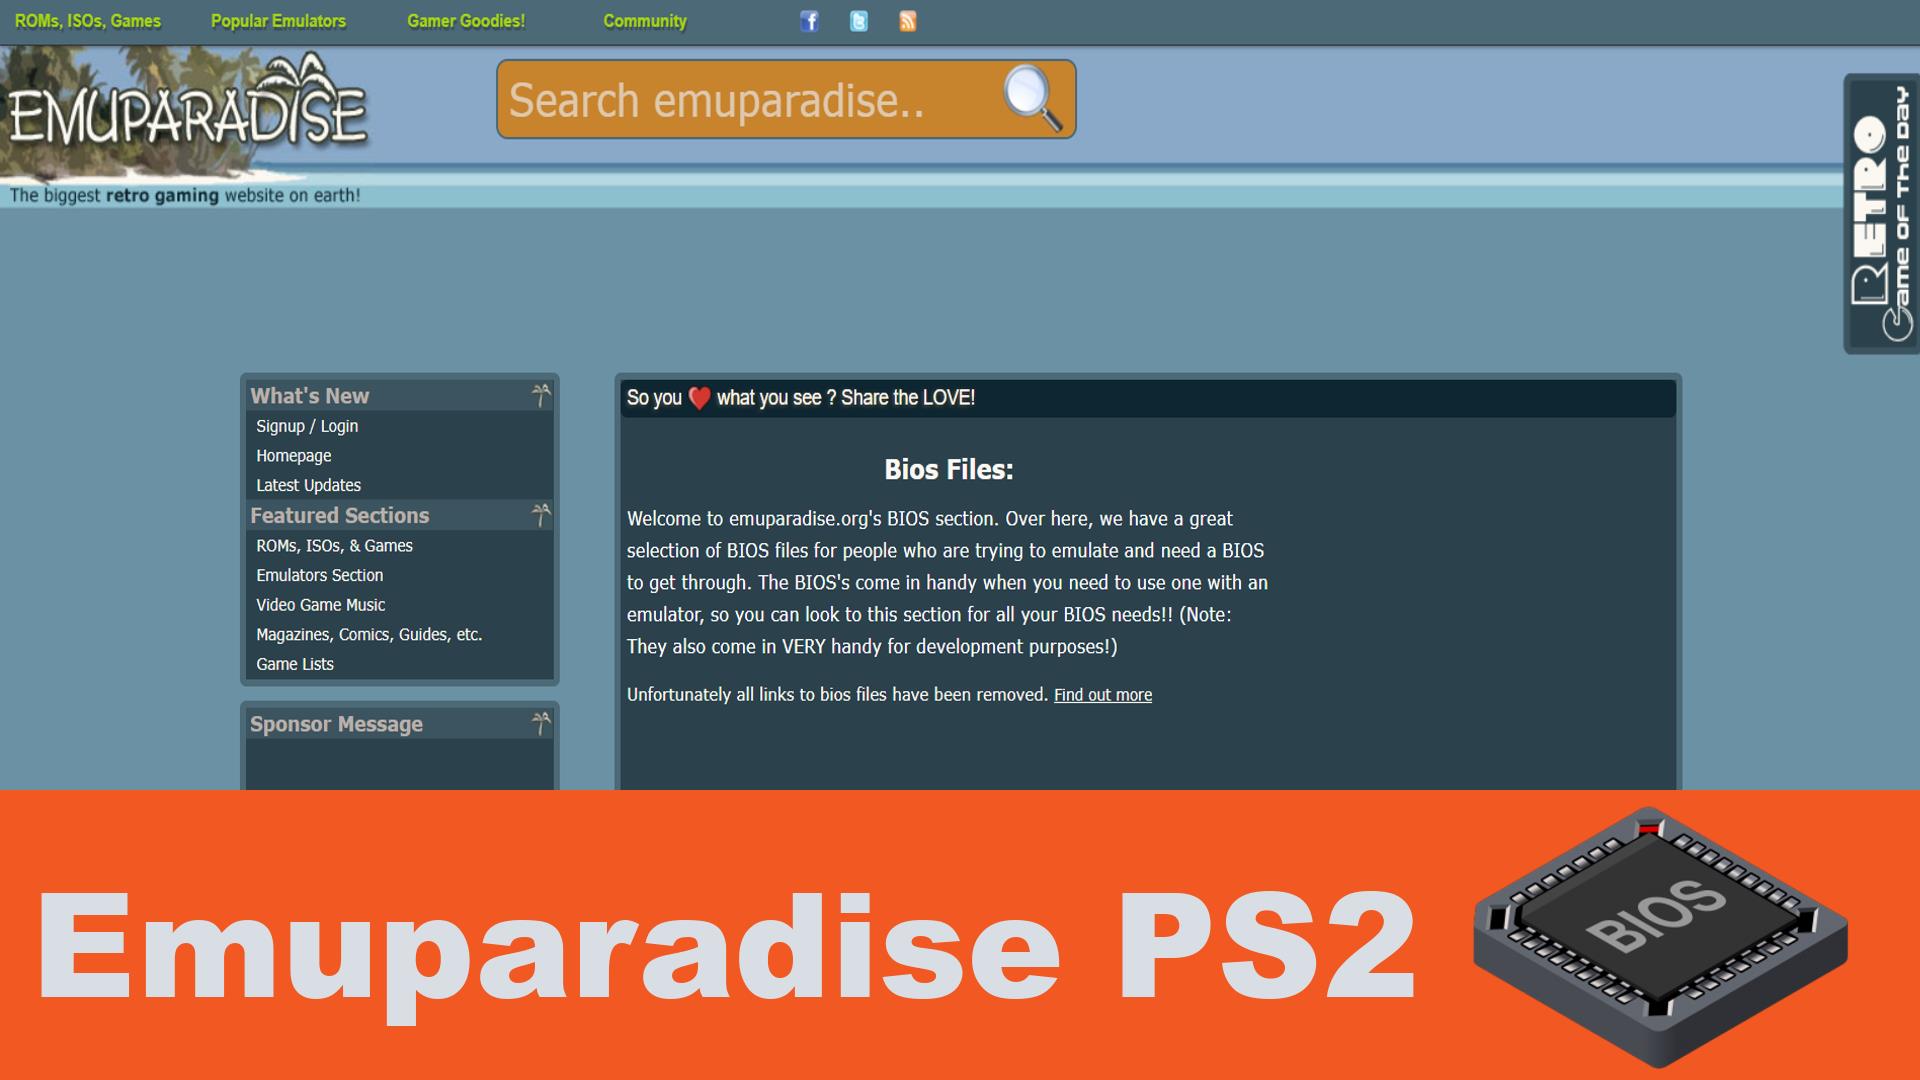 download ps2 bios for pcsx2 emuparadise